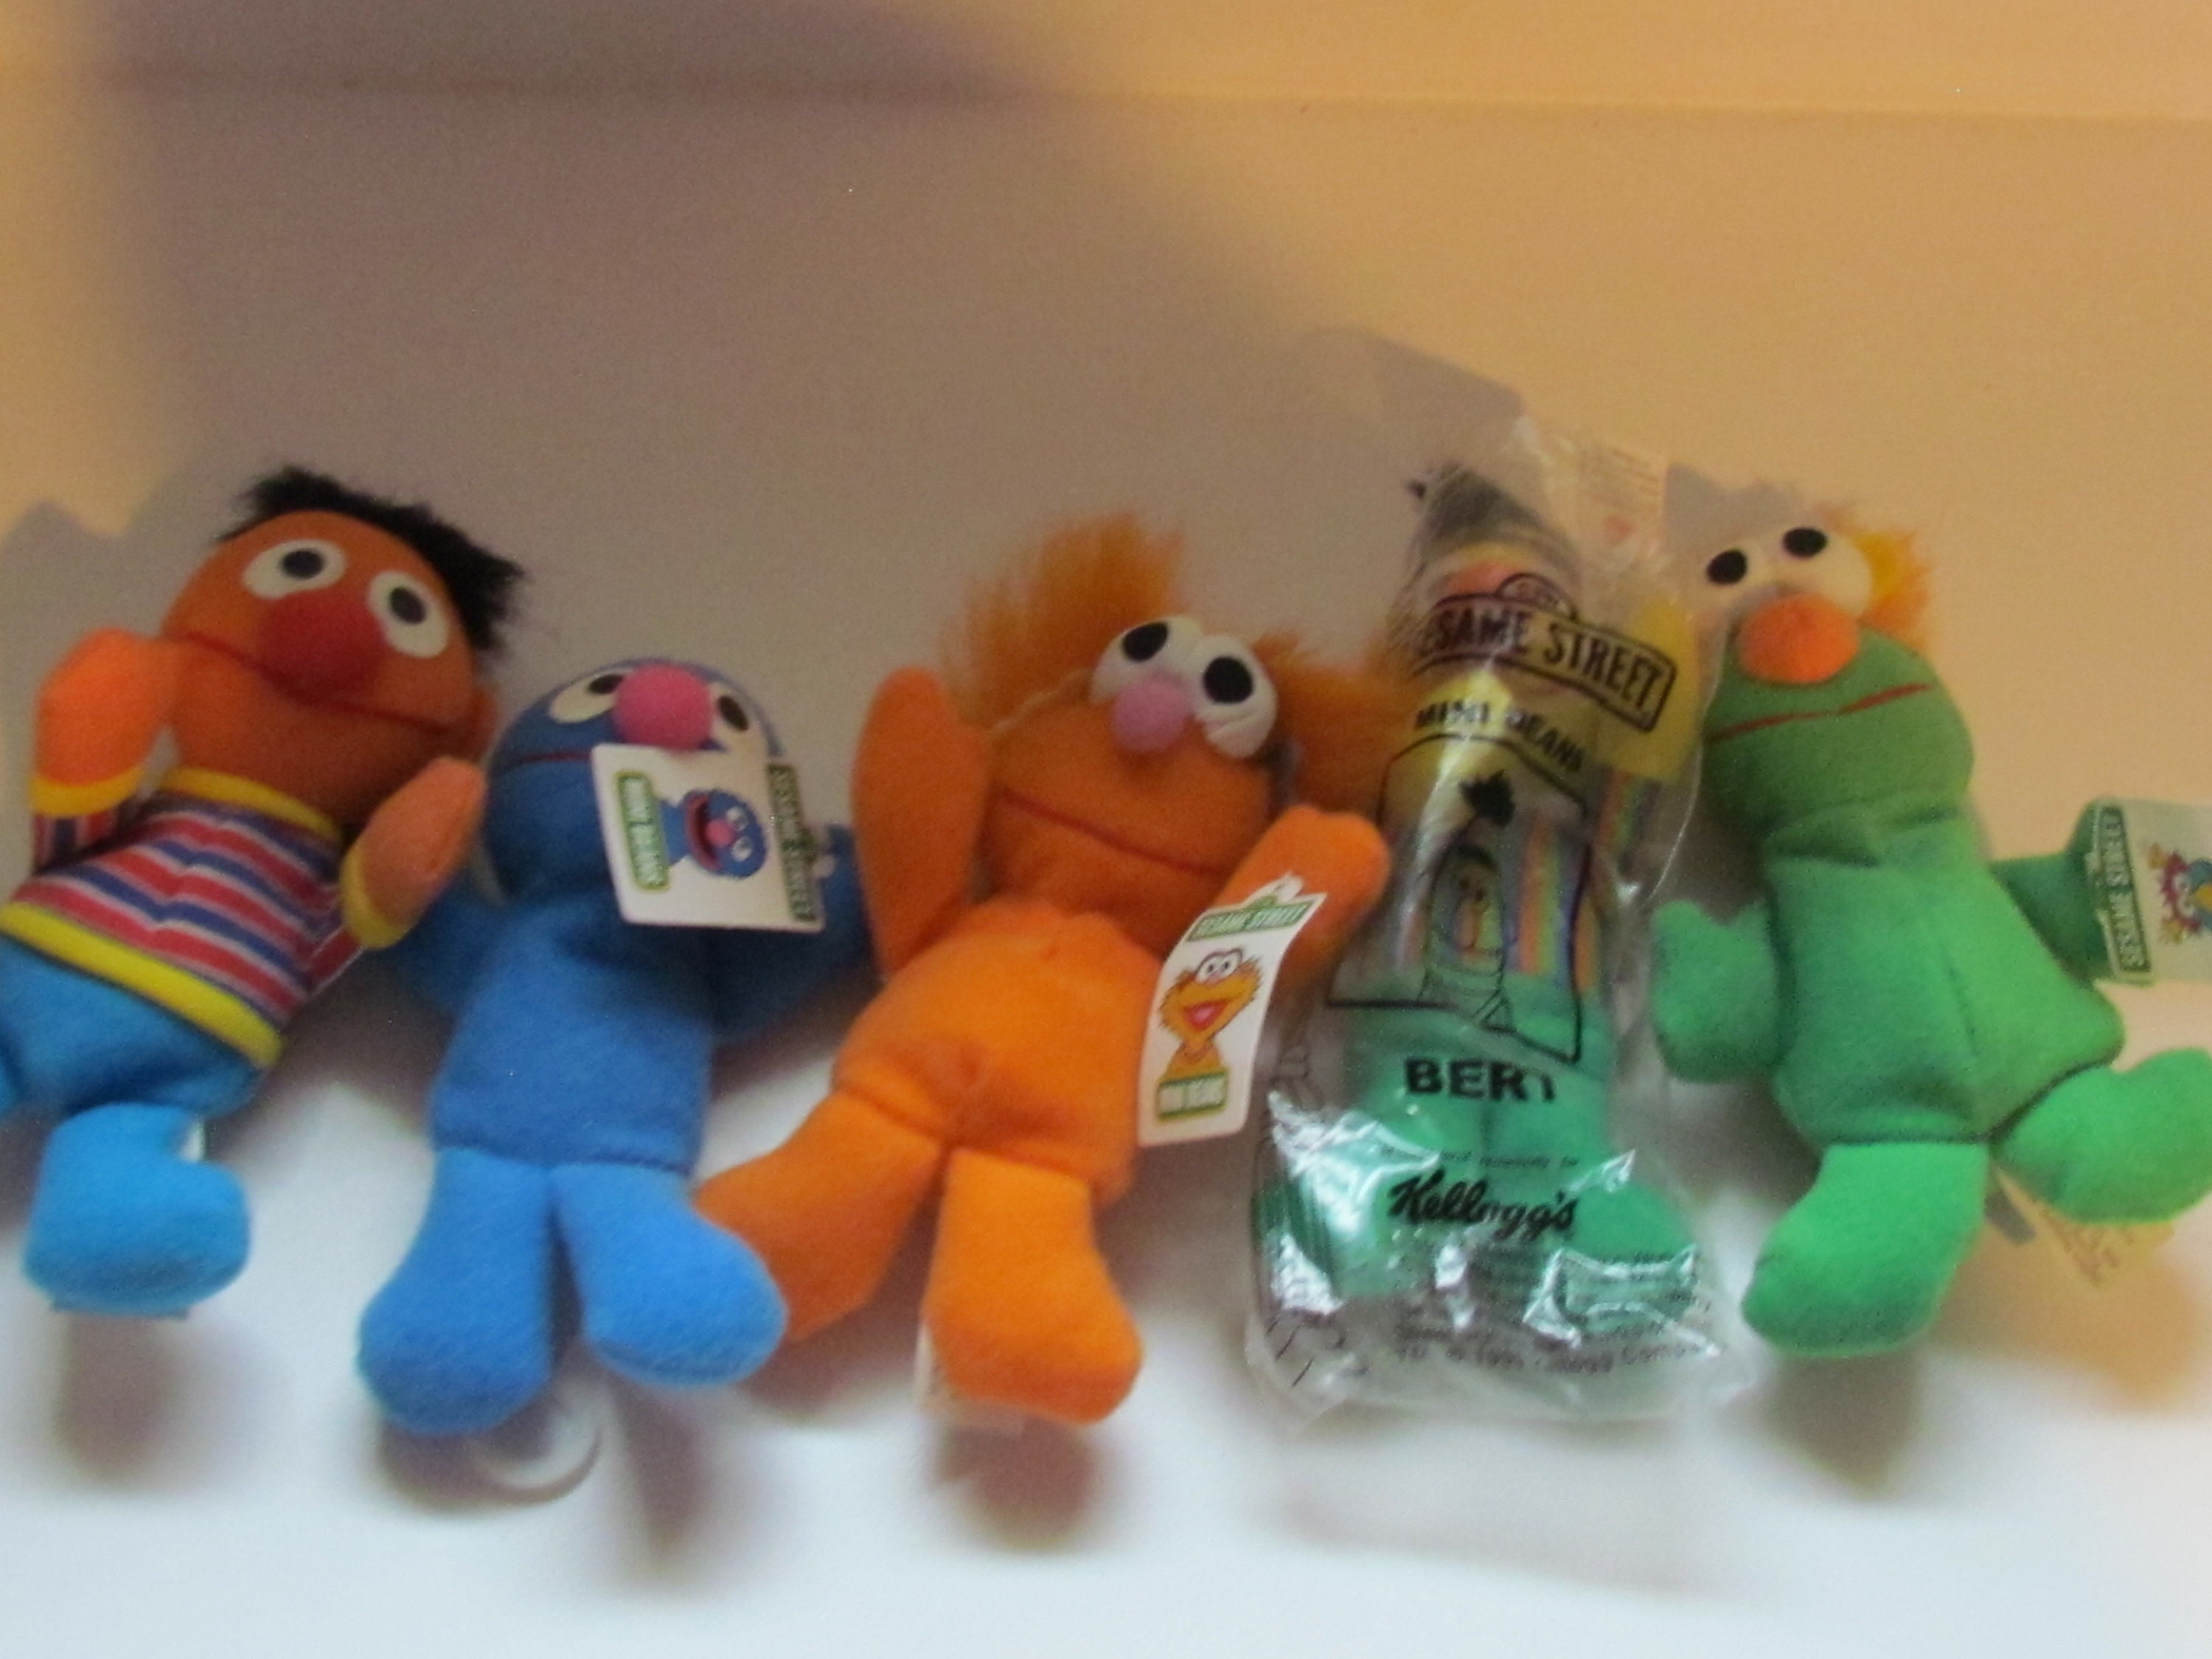 Kellogg's Muppets Benny Rabbit Bean Toy